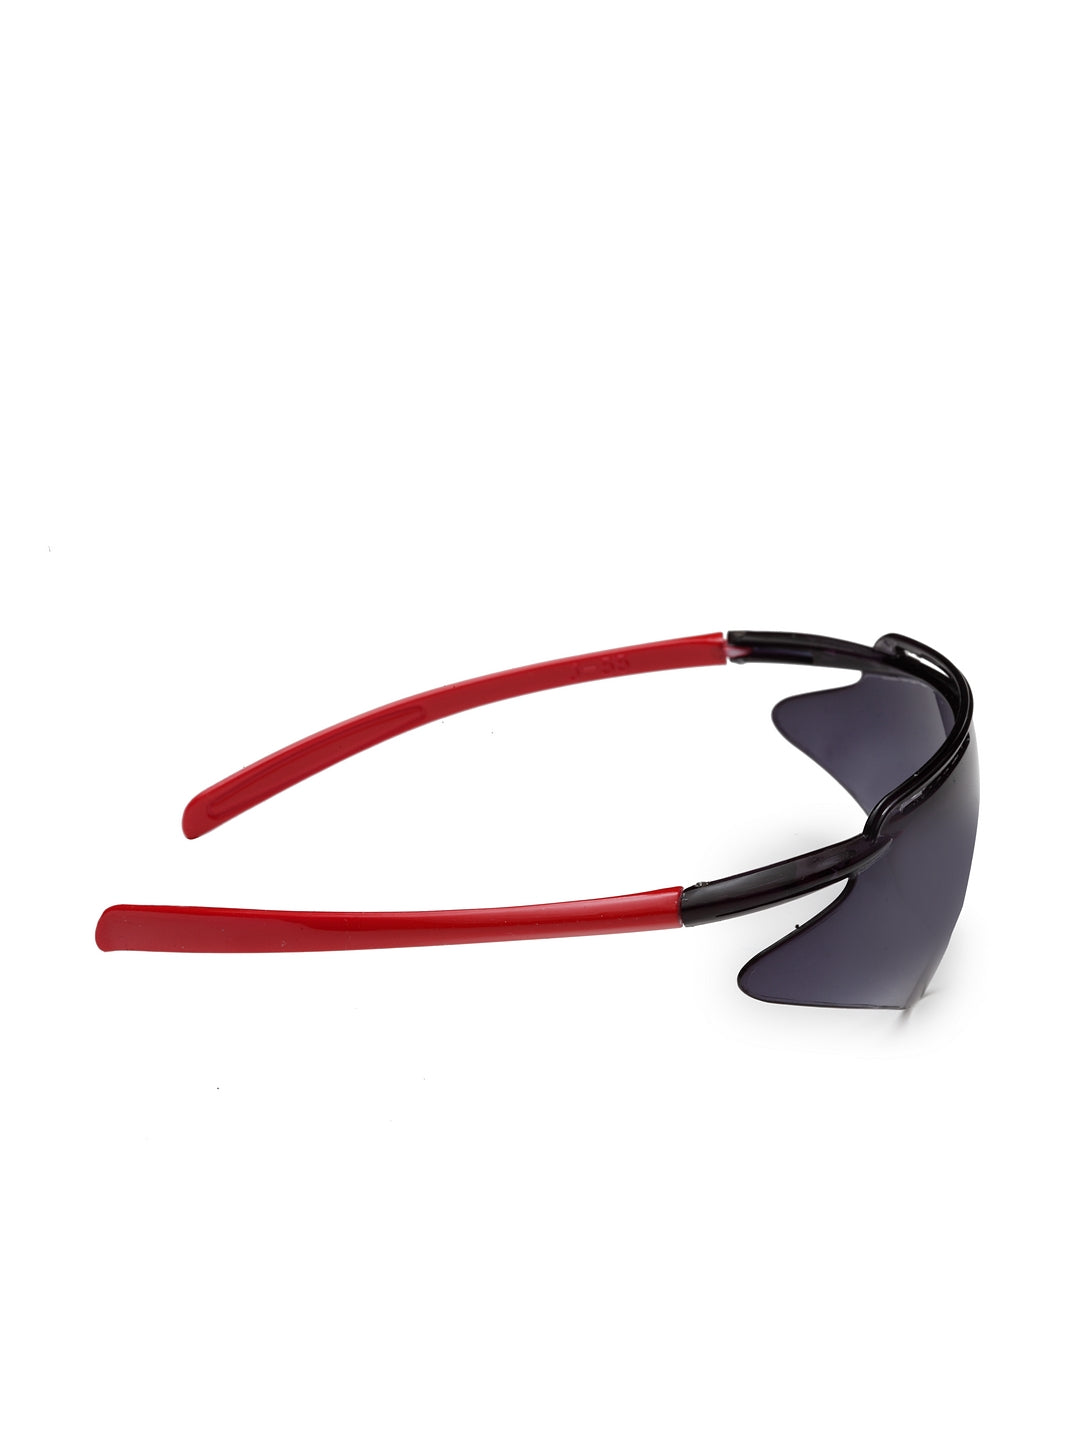 Stol'n Premium Attractive Fashionable UV-Protected Sports Shape Sunglasses - Black